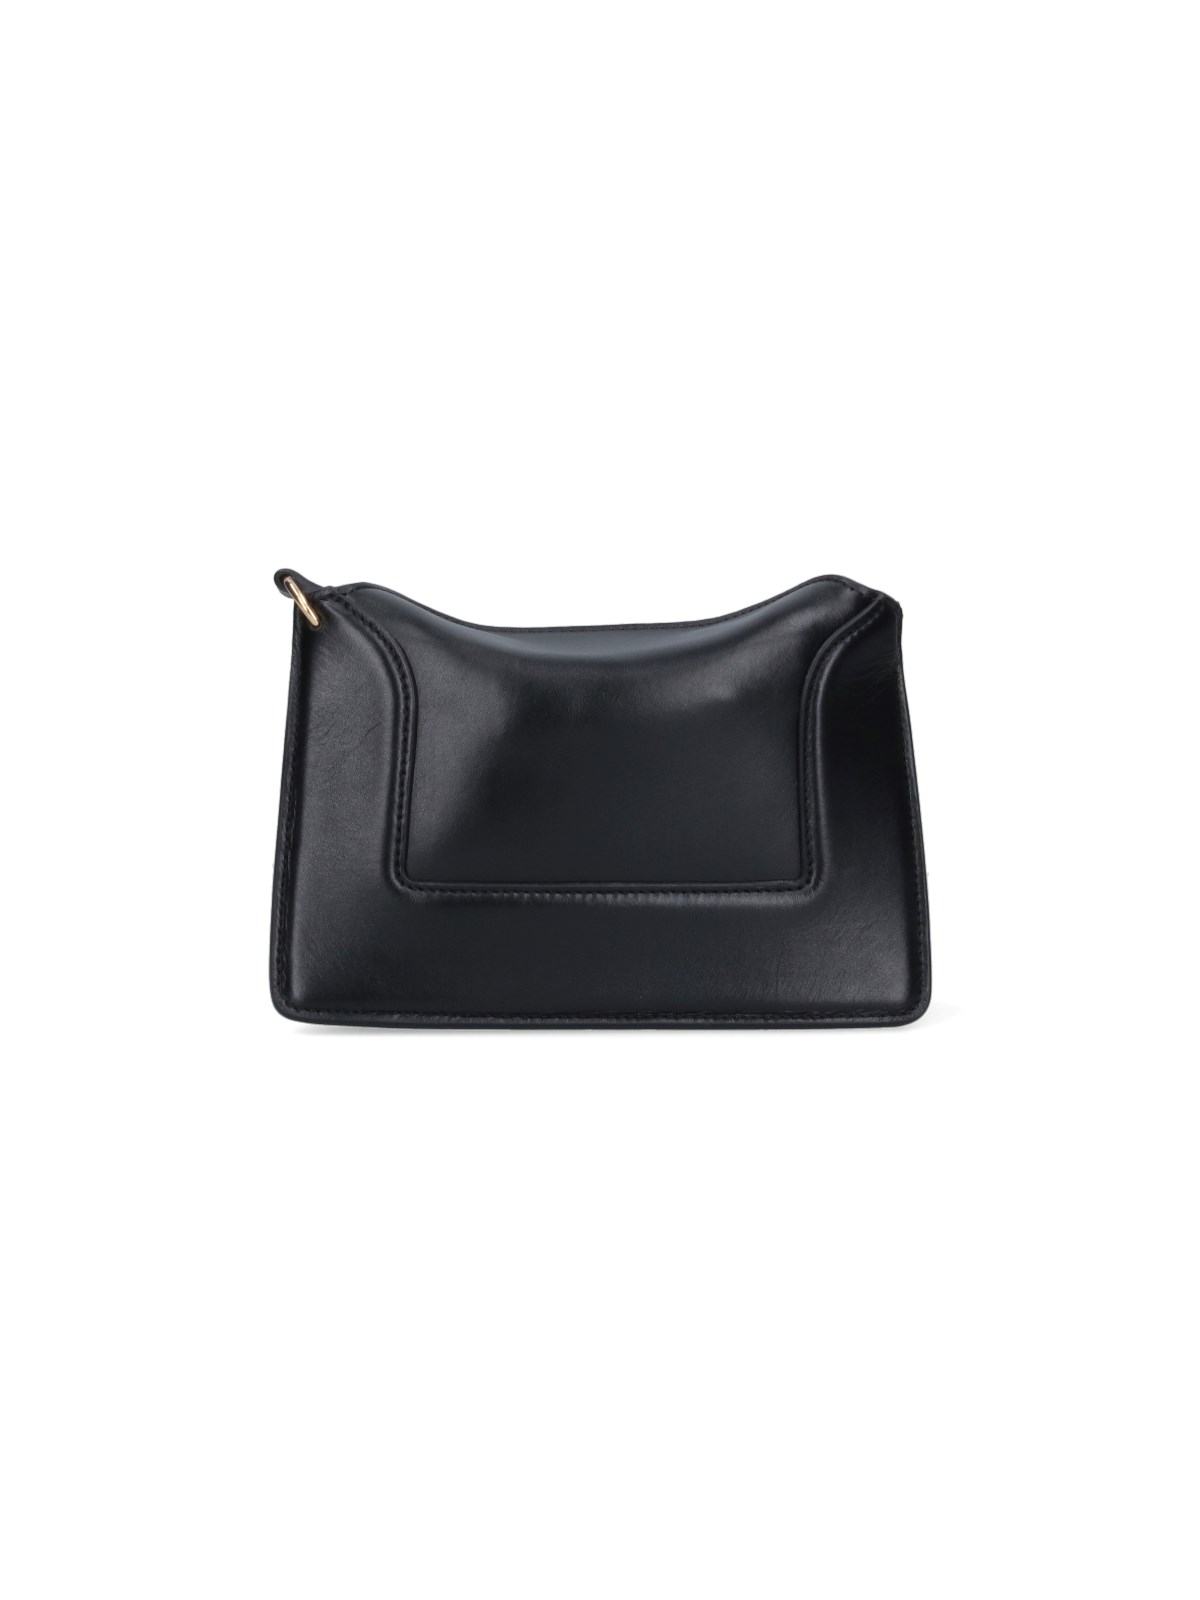 Wandler 'penelope' mini bag available on SUGAR - 144941